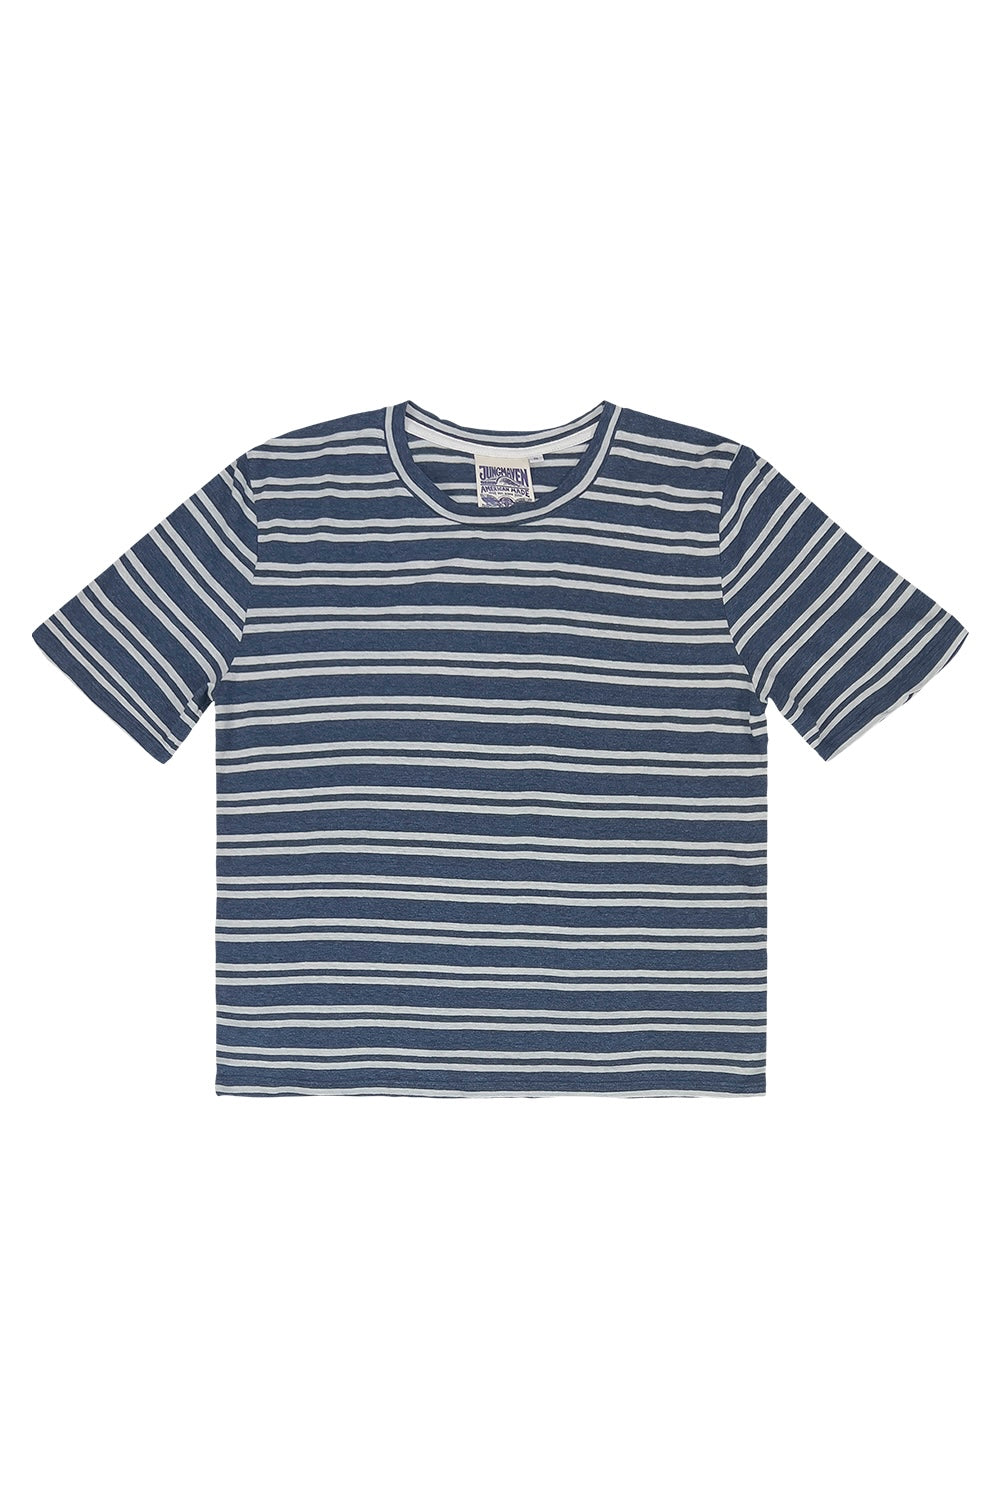 Stripe Silverlake Cropped Tee | Jungmaven Hemp Clothing & Accessories / Color:Blue/White Stripe